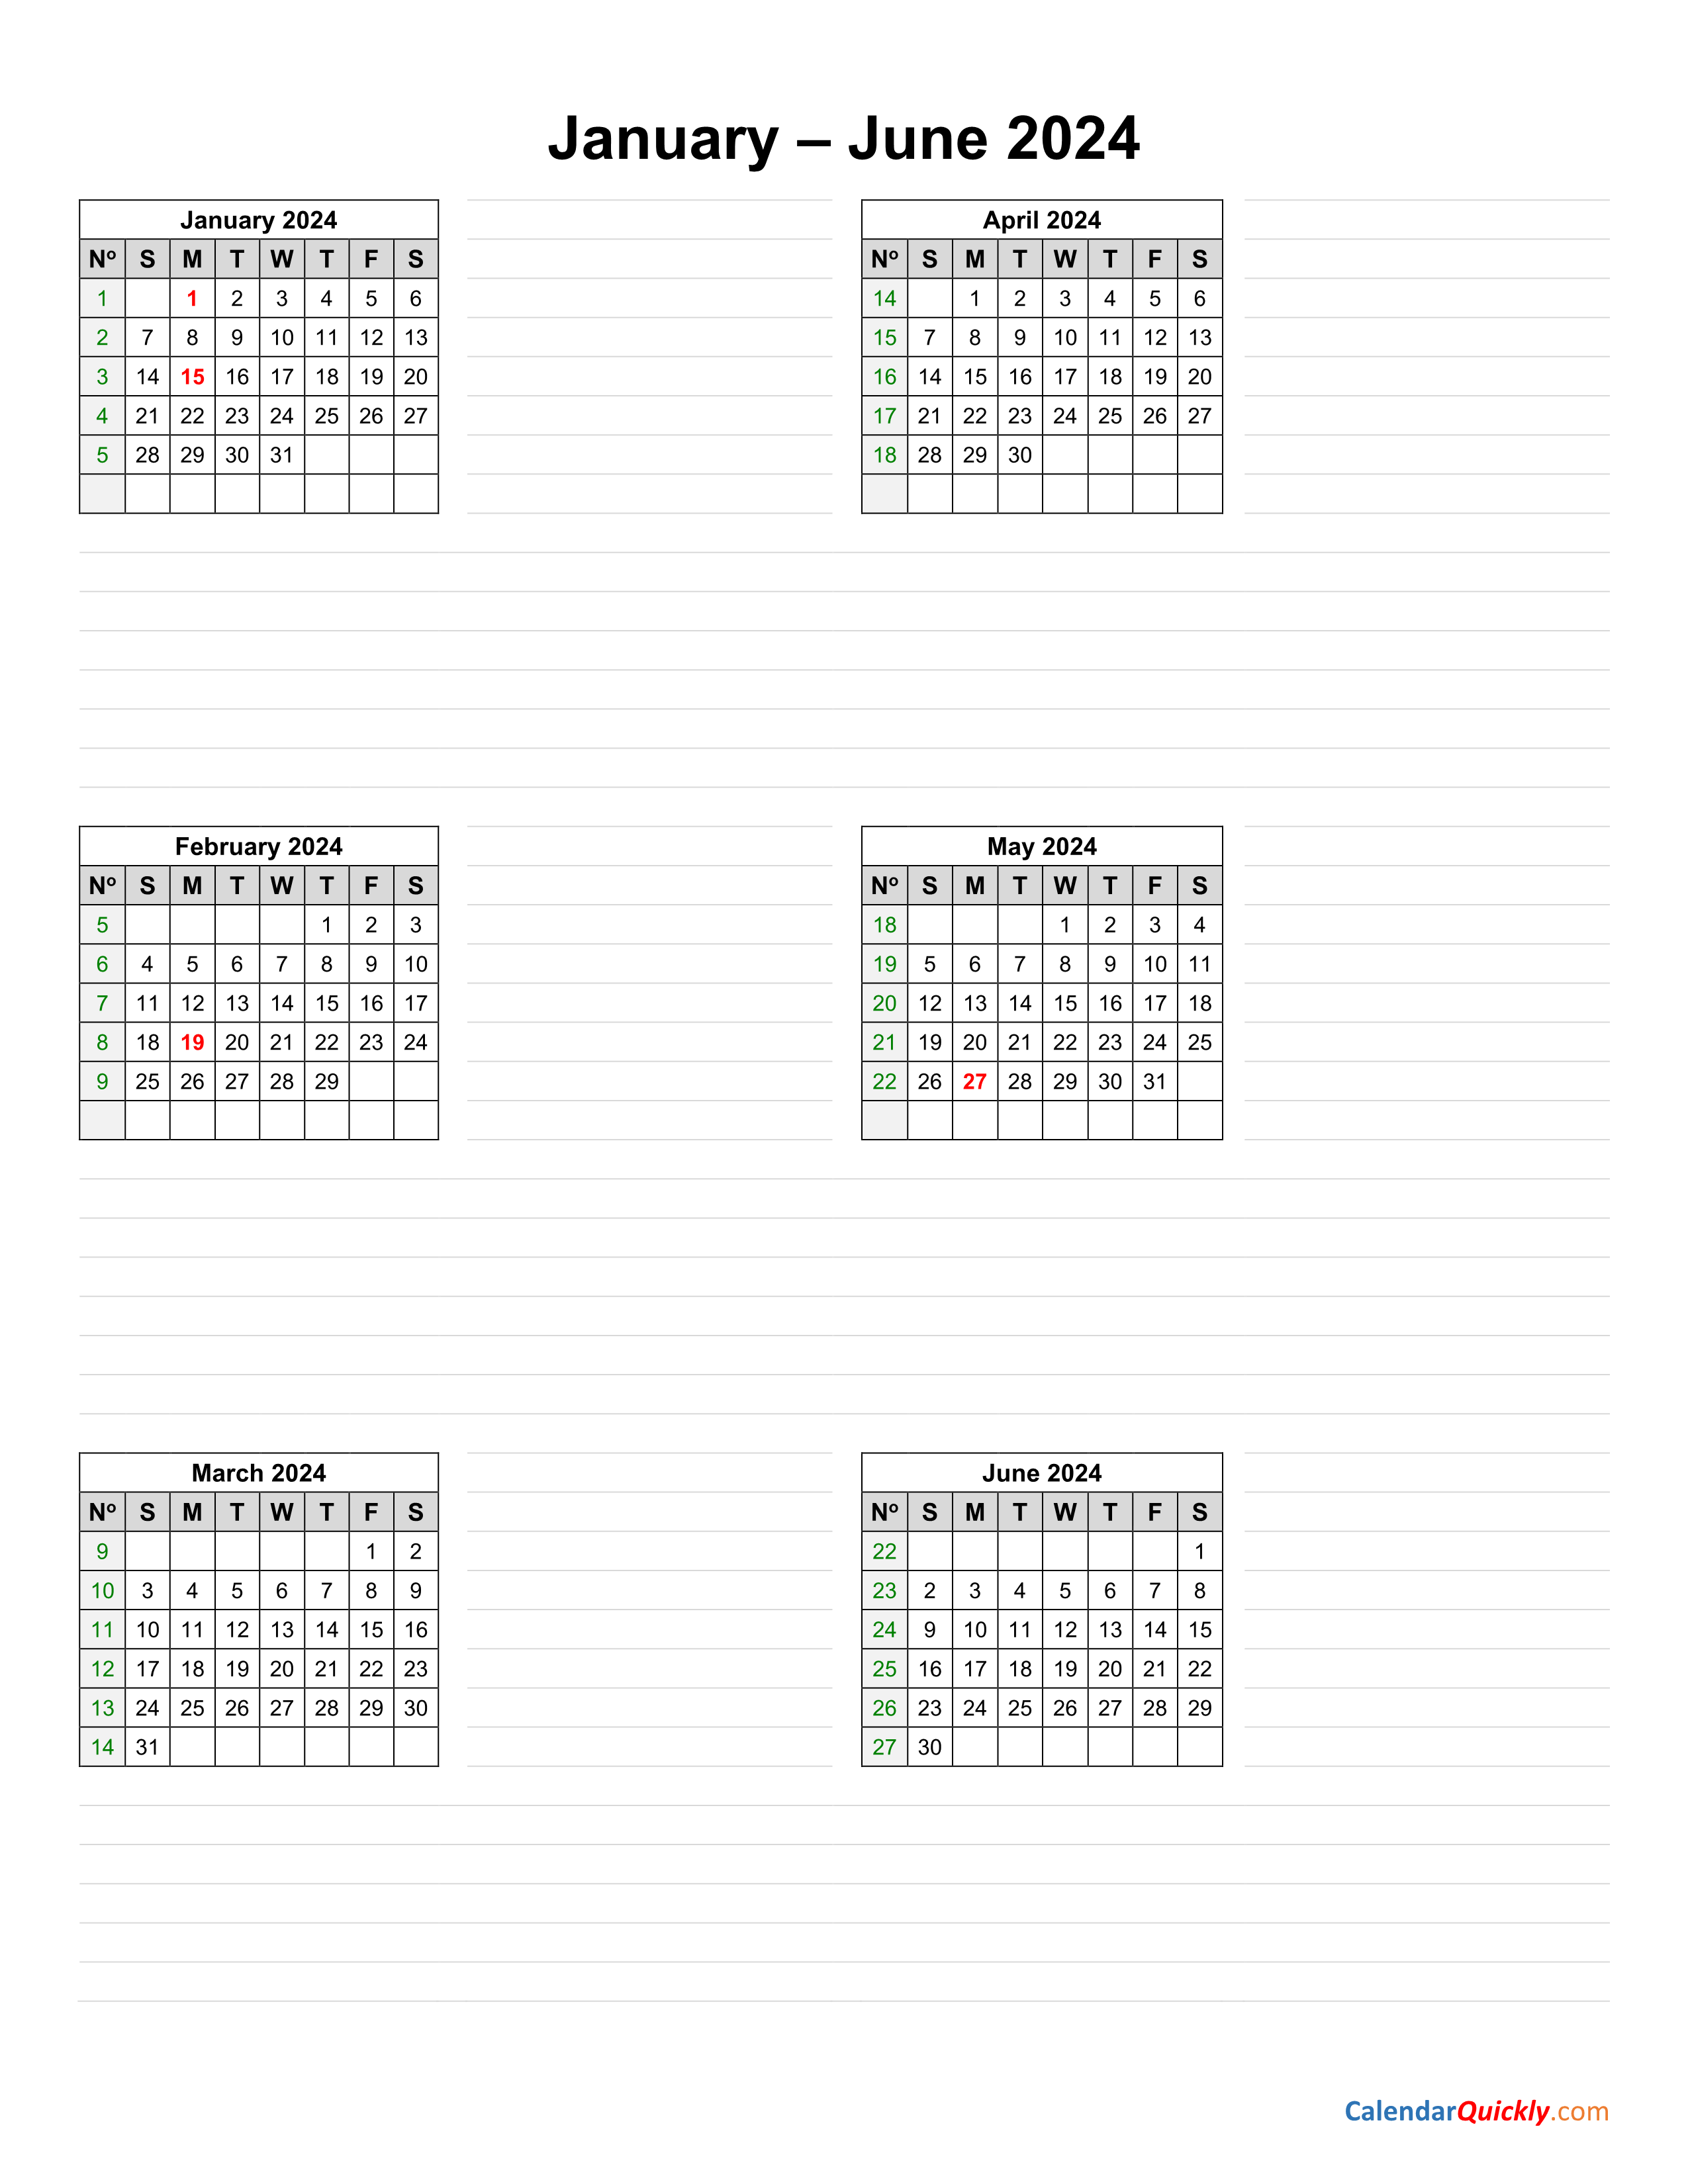 January To June 2024 Calendar Vertical | Calendar Quickly within January June 2024 Calendar Printable